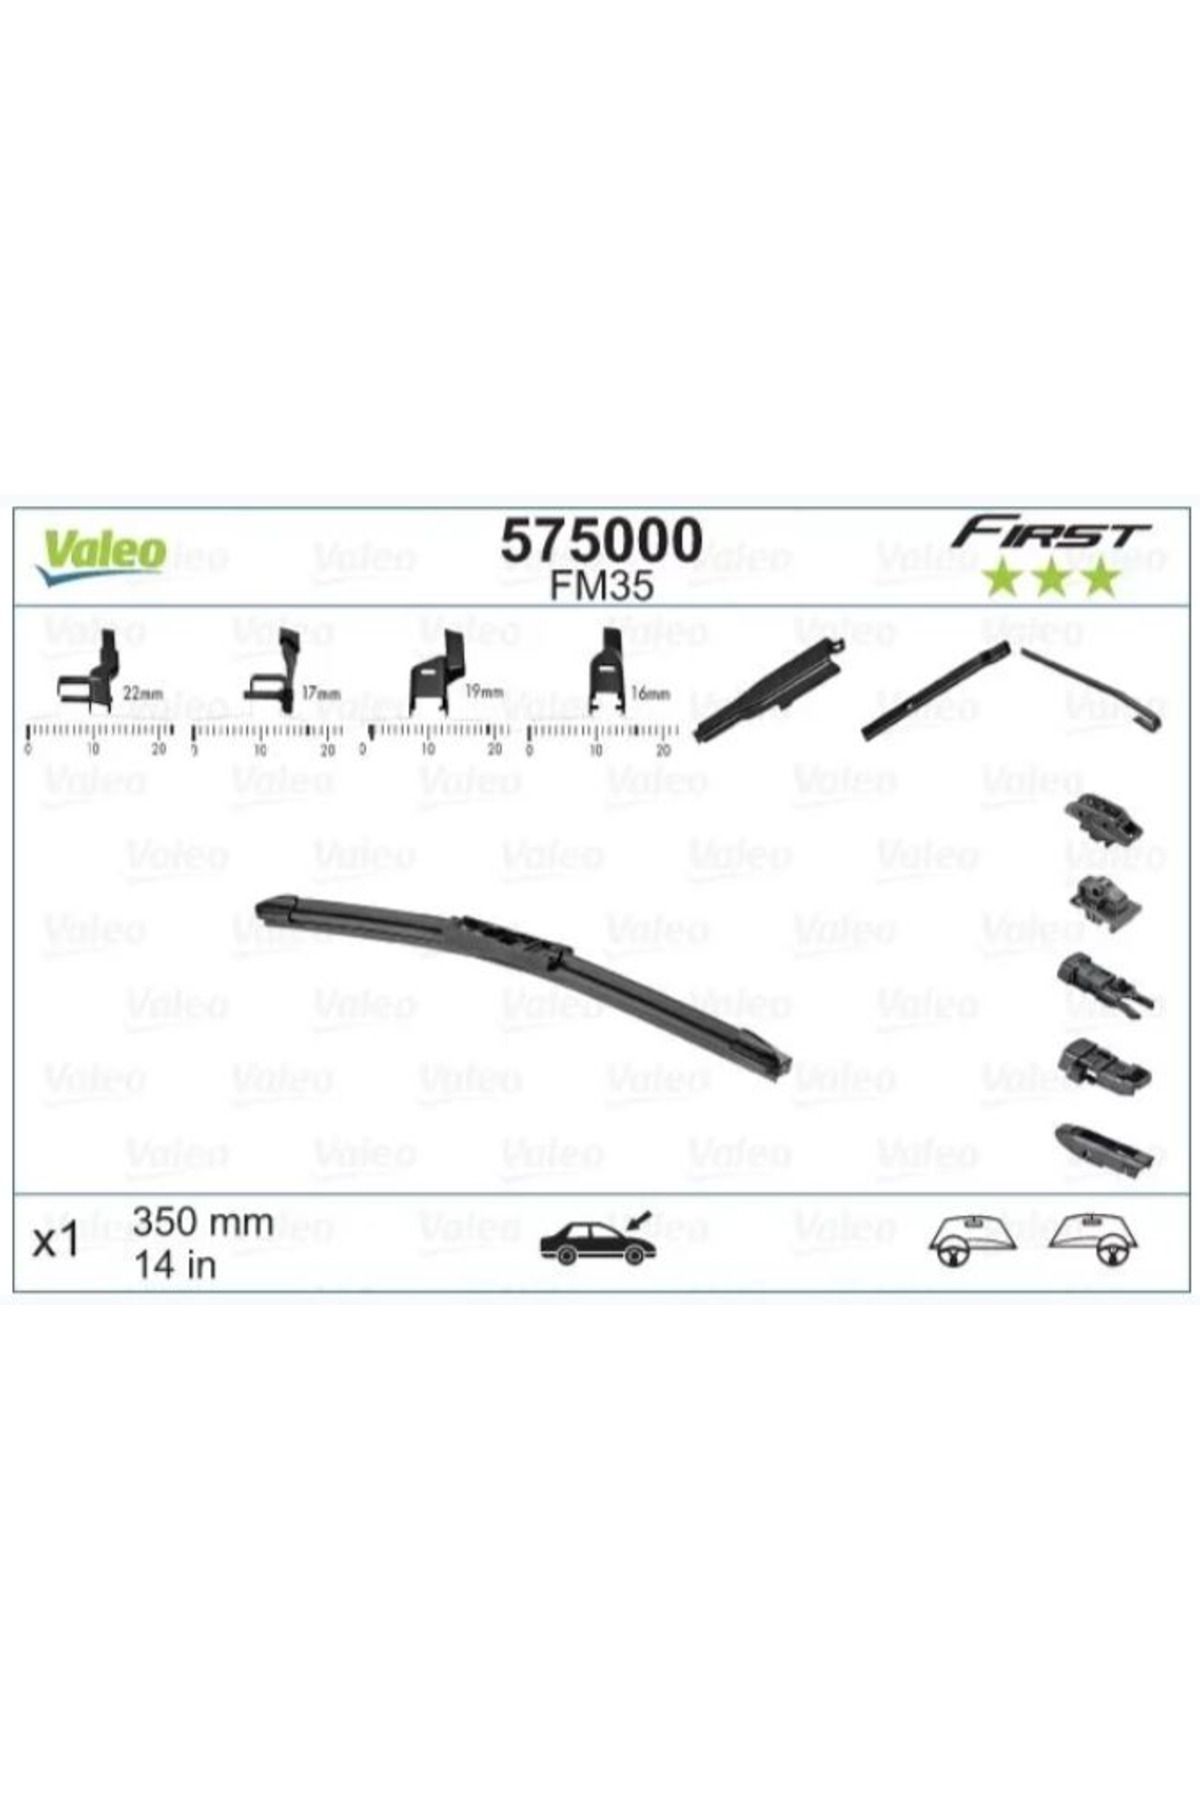 Valeo Fırst Multıconnectıon Flat Blade (muz Tıpı) Sılecek (unıversal) Flat Blade Fm35 (x1) (350 Mm) -